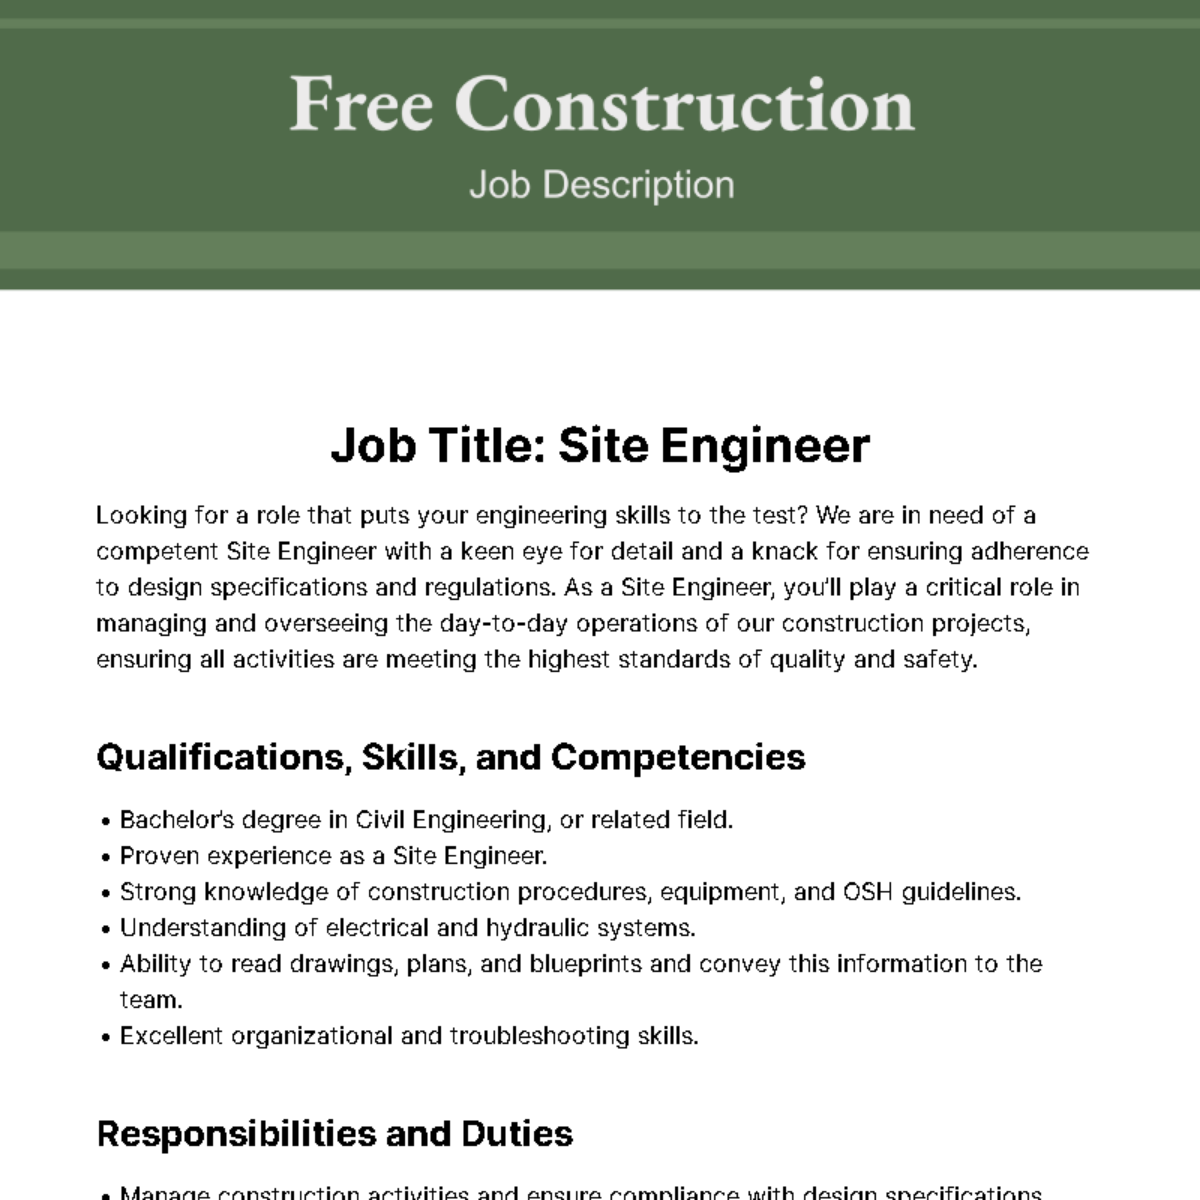 Free Construction Job Description Template